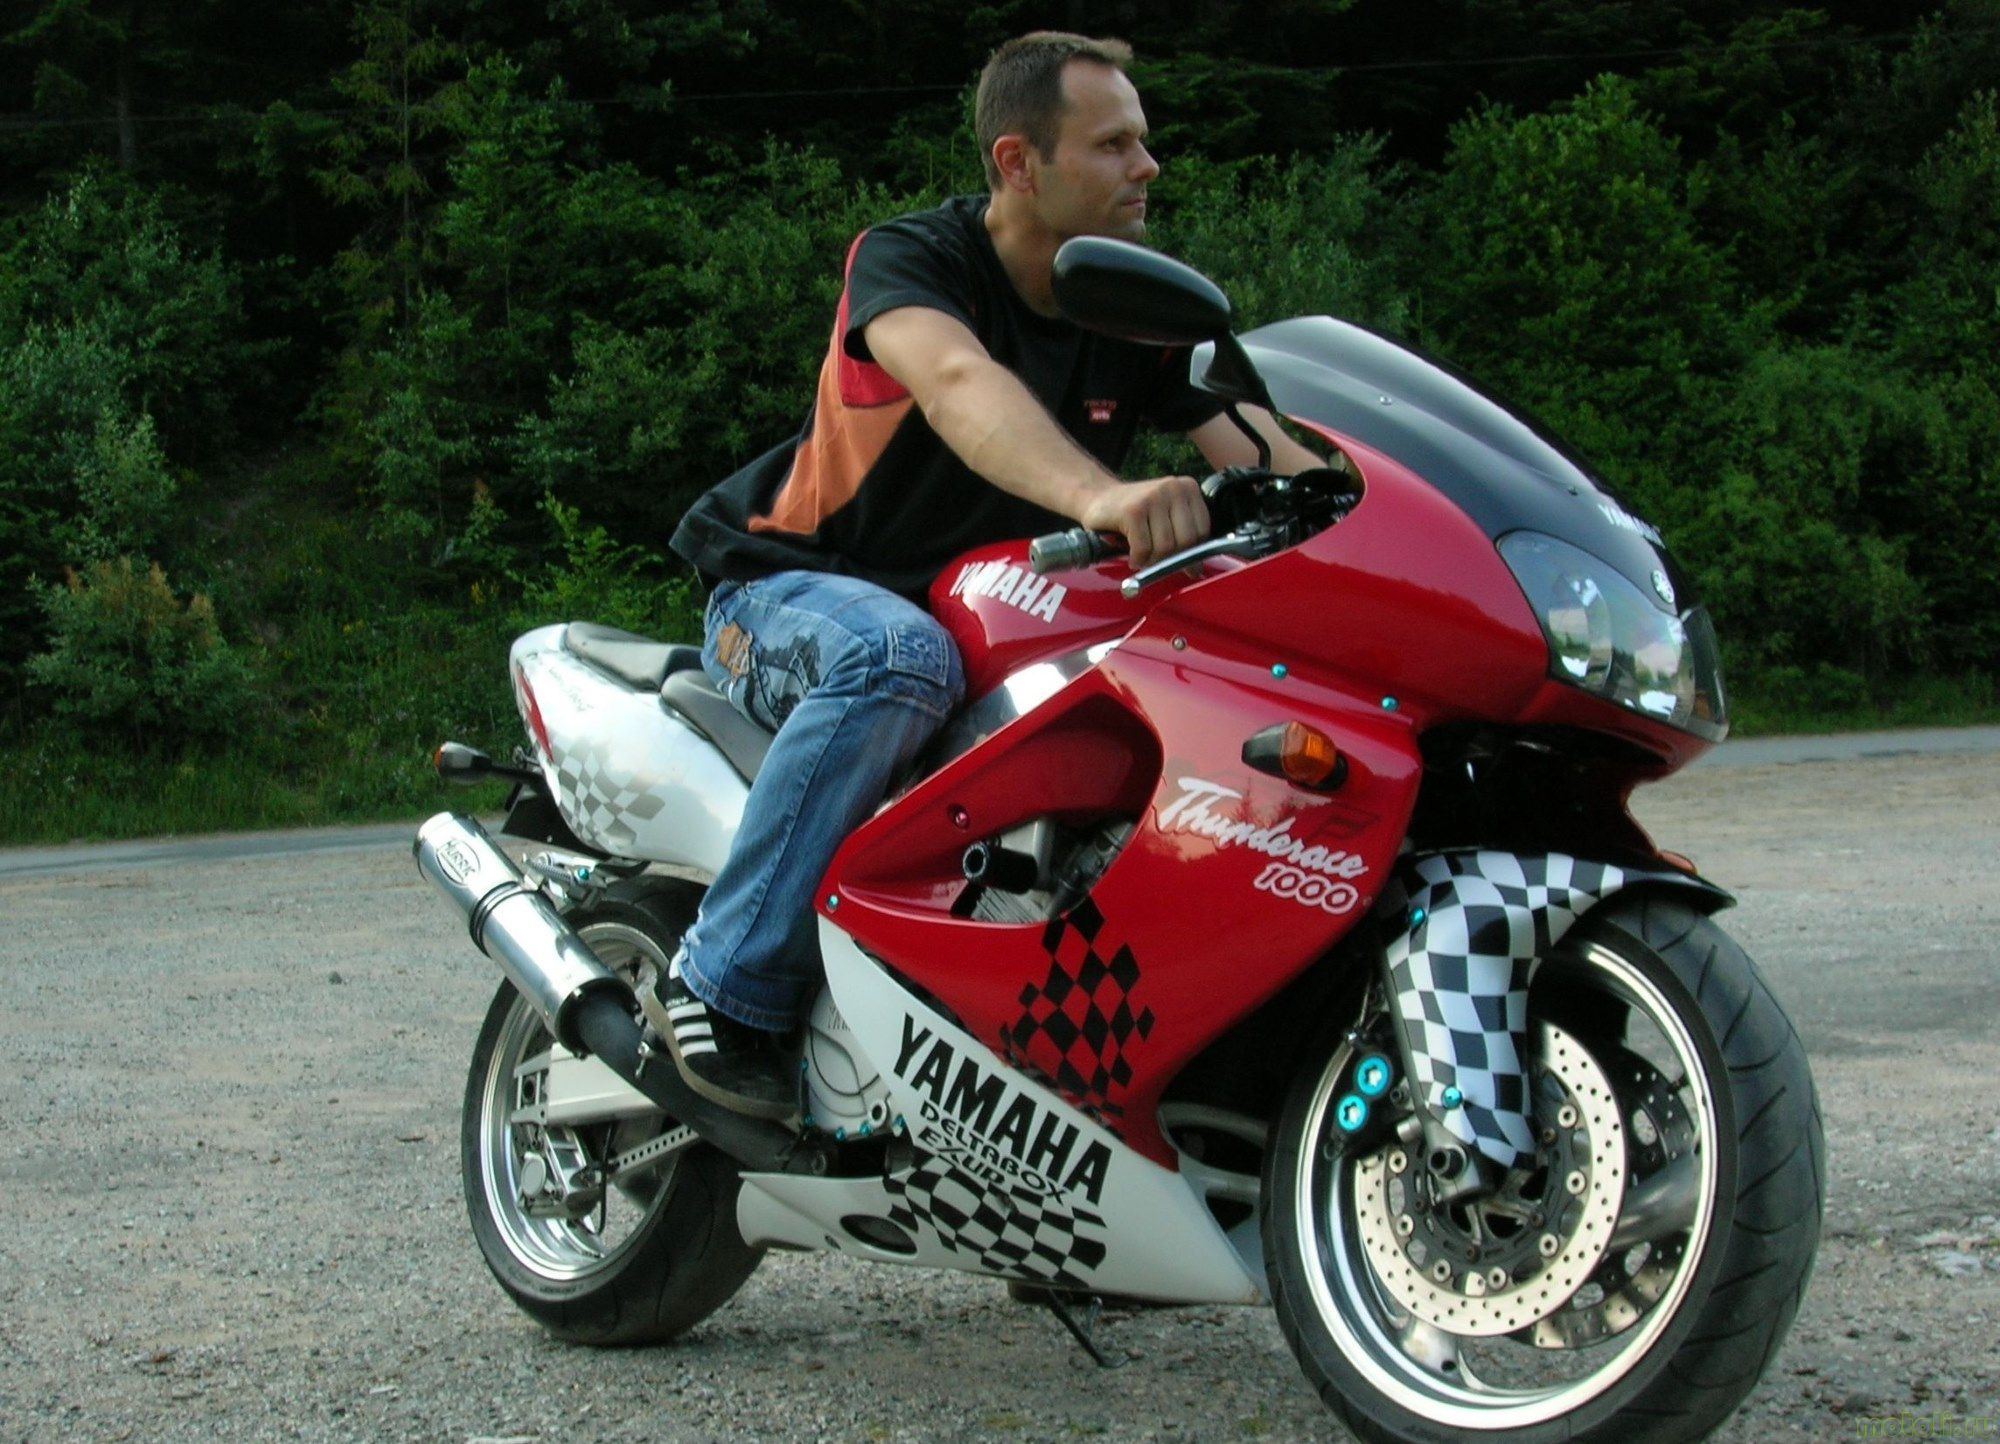 Yamaha yzf1000r thunderace: review, history, specs - bikeswiki.com, japanese motorcycle encyclopedia